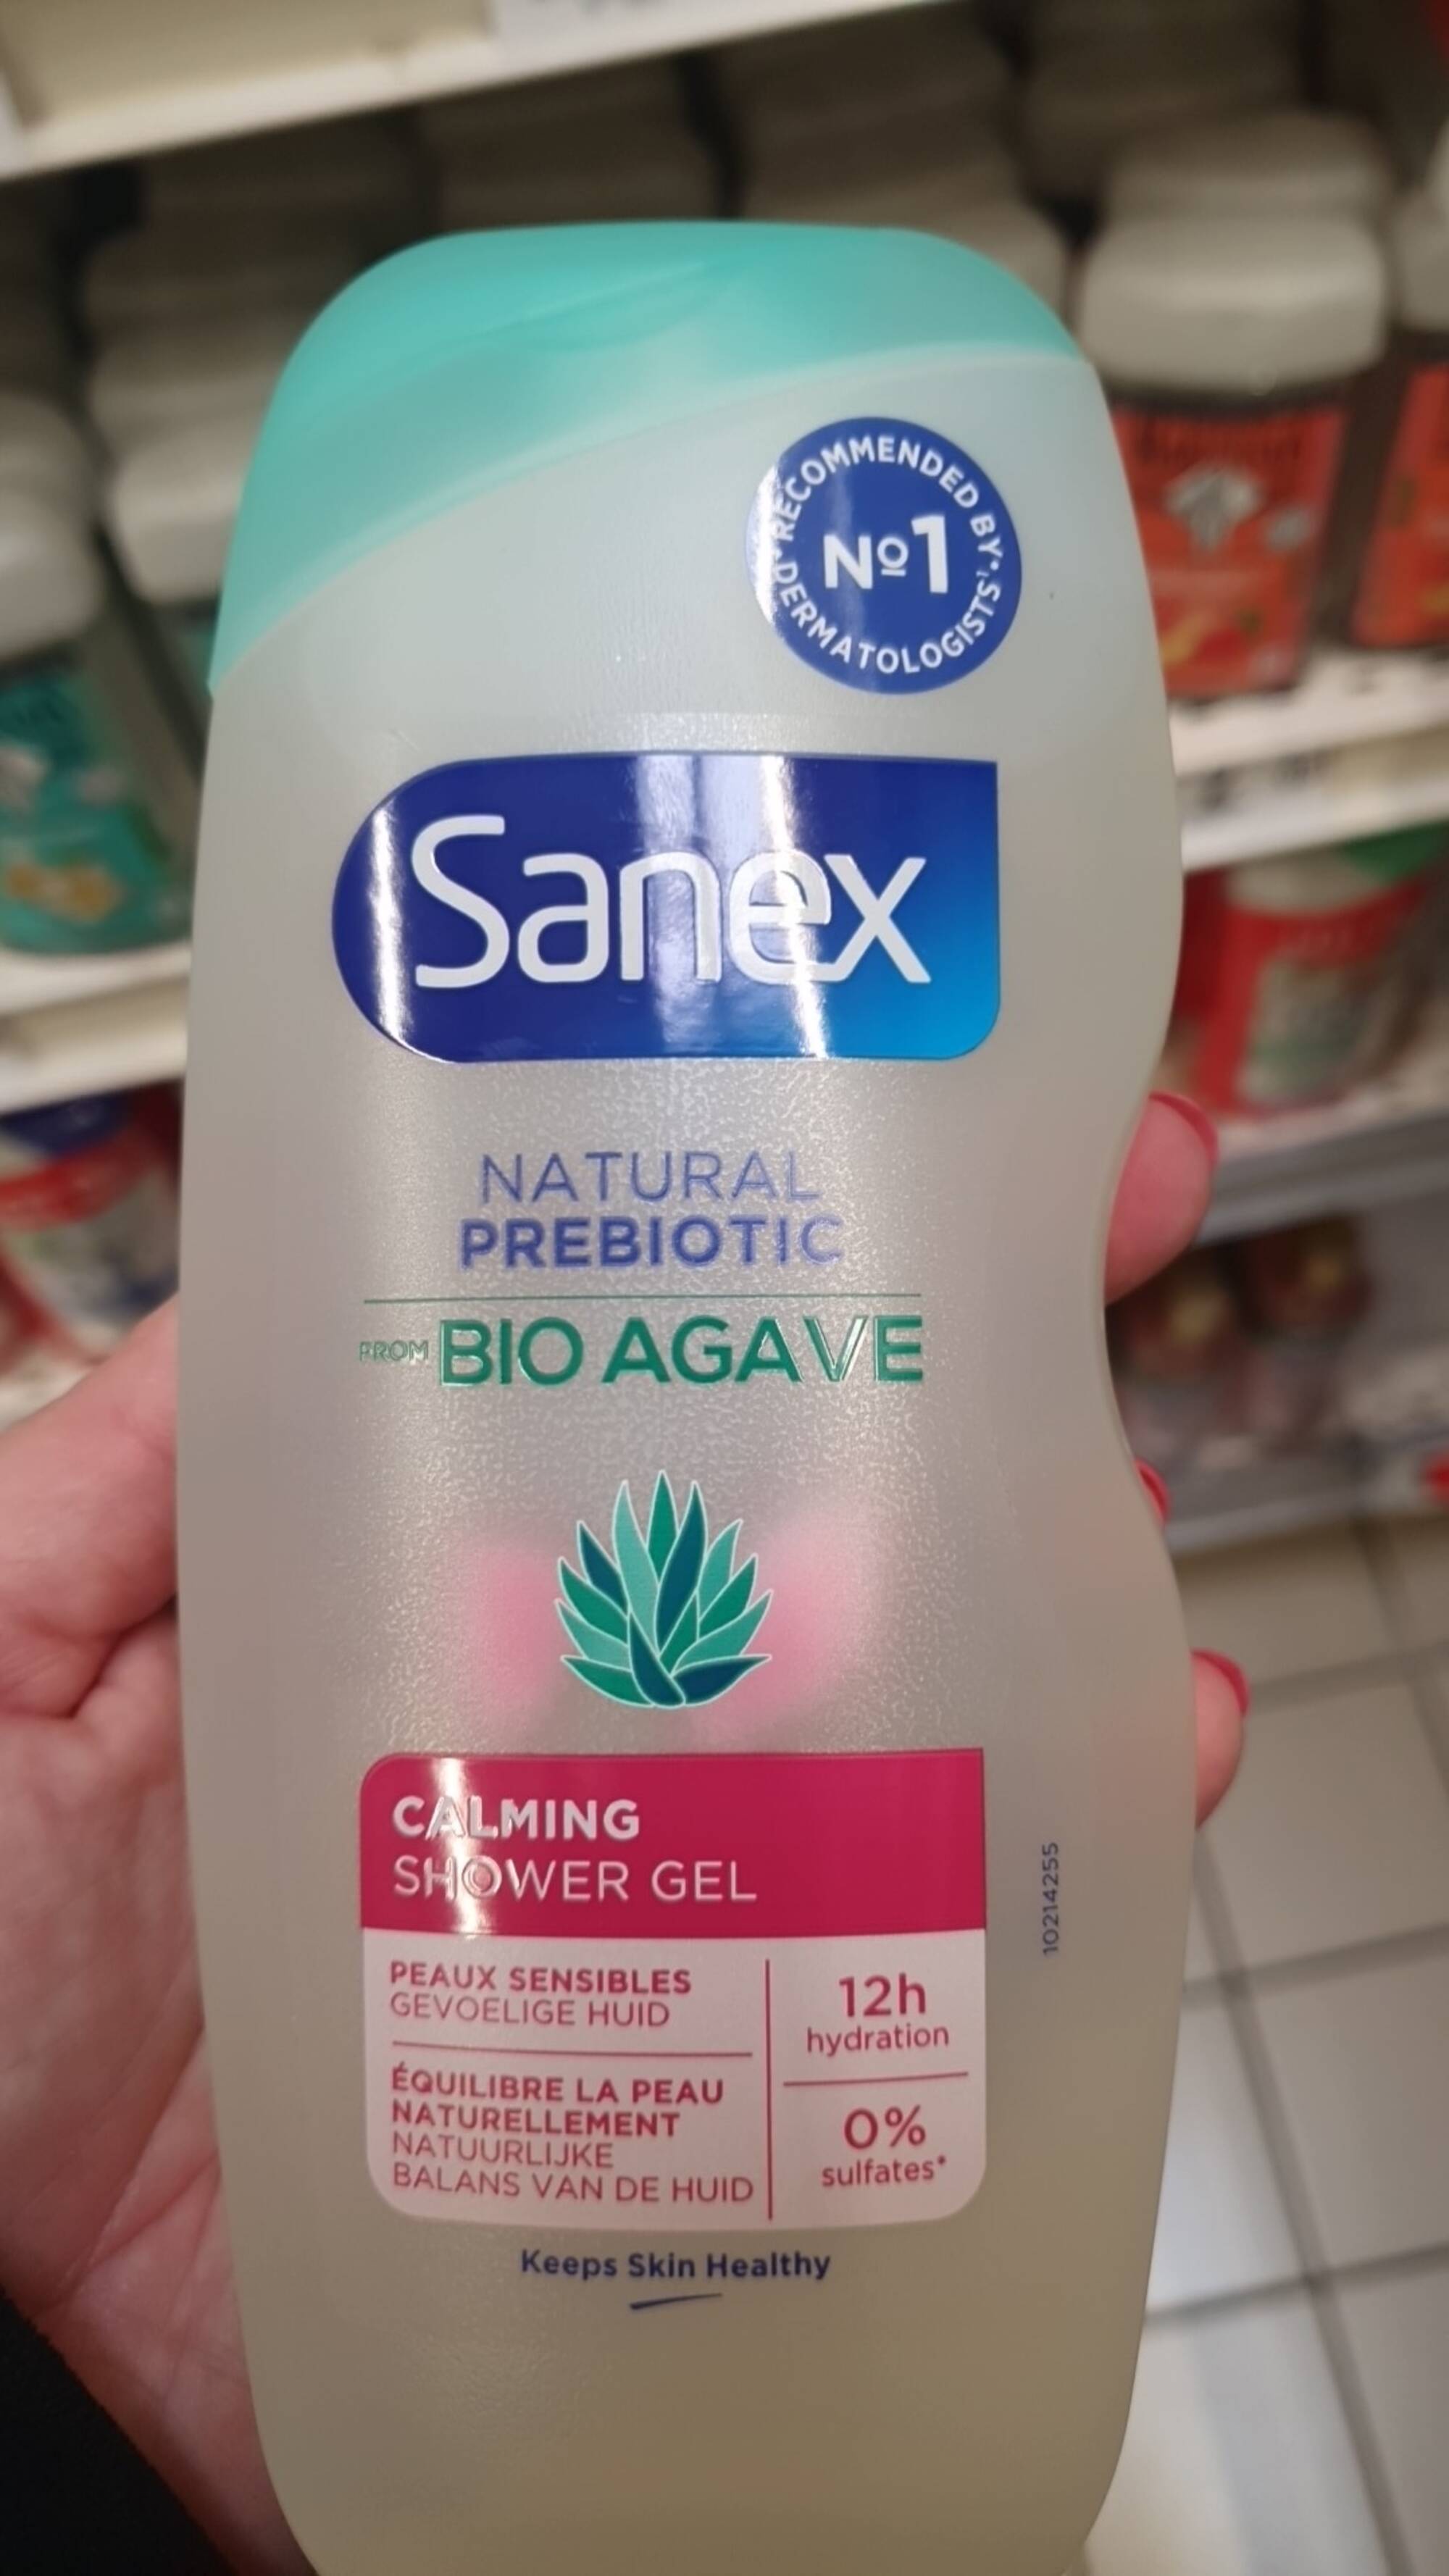 SANEX - Natural prebiotic - Calming shower gel